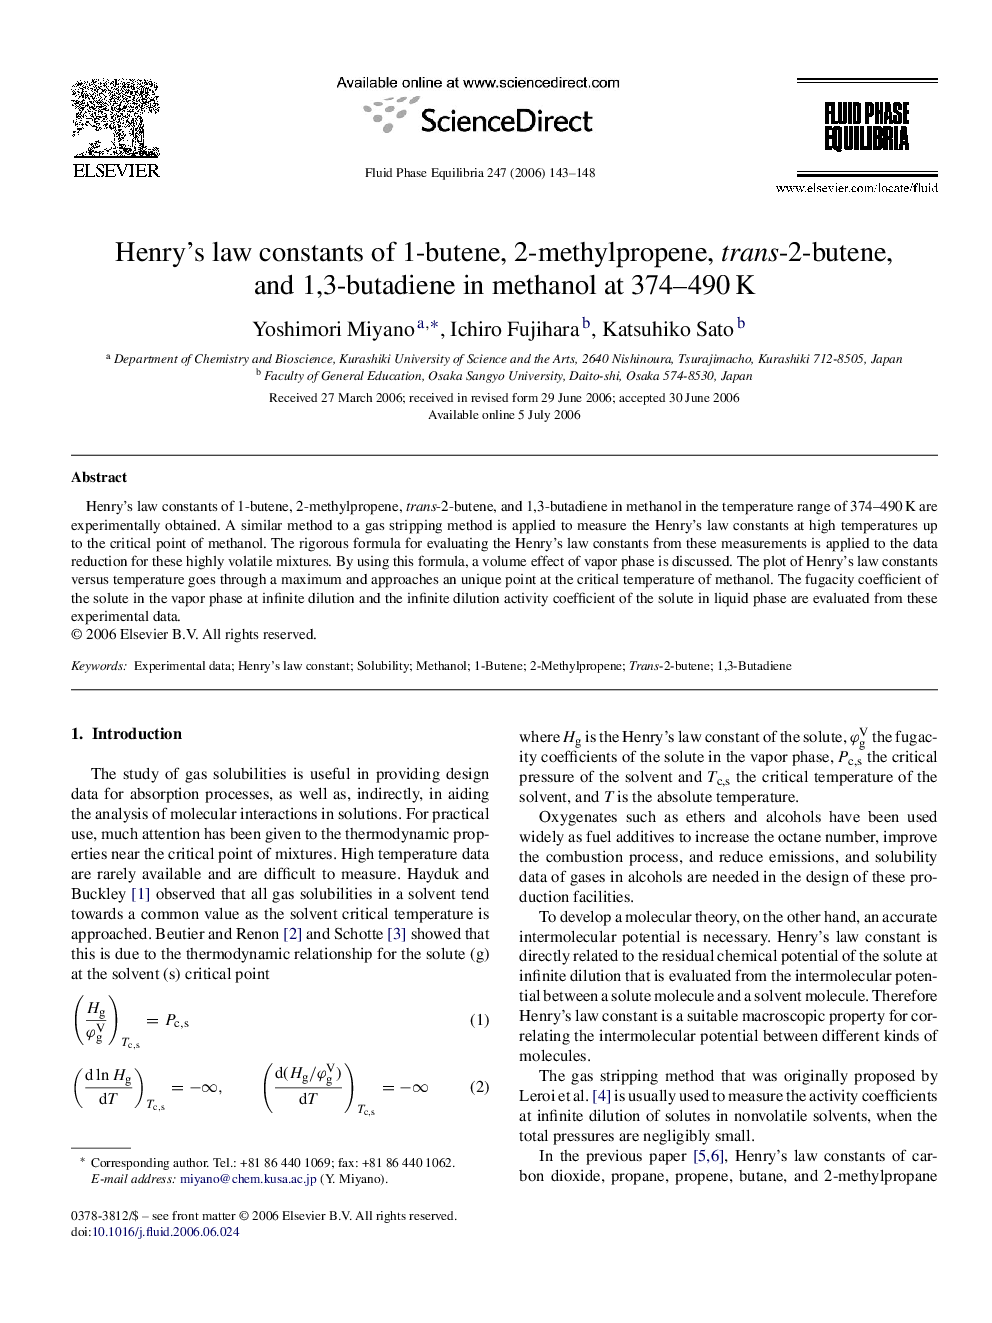 Henry's law constants of 1-butene, 2-methylpropene, trans-2-butene, and 1,3-butadiene in methanol at 374–490 K